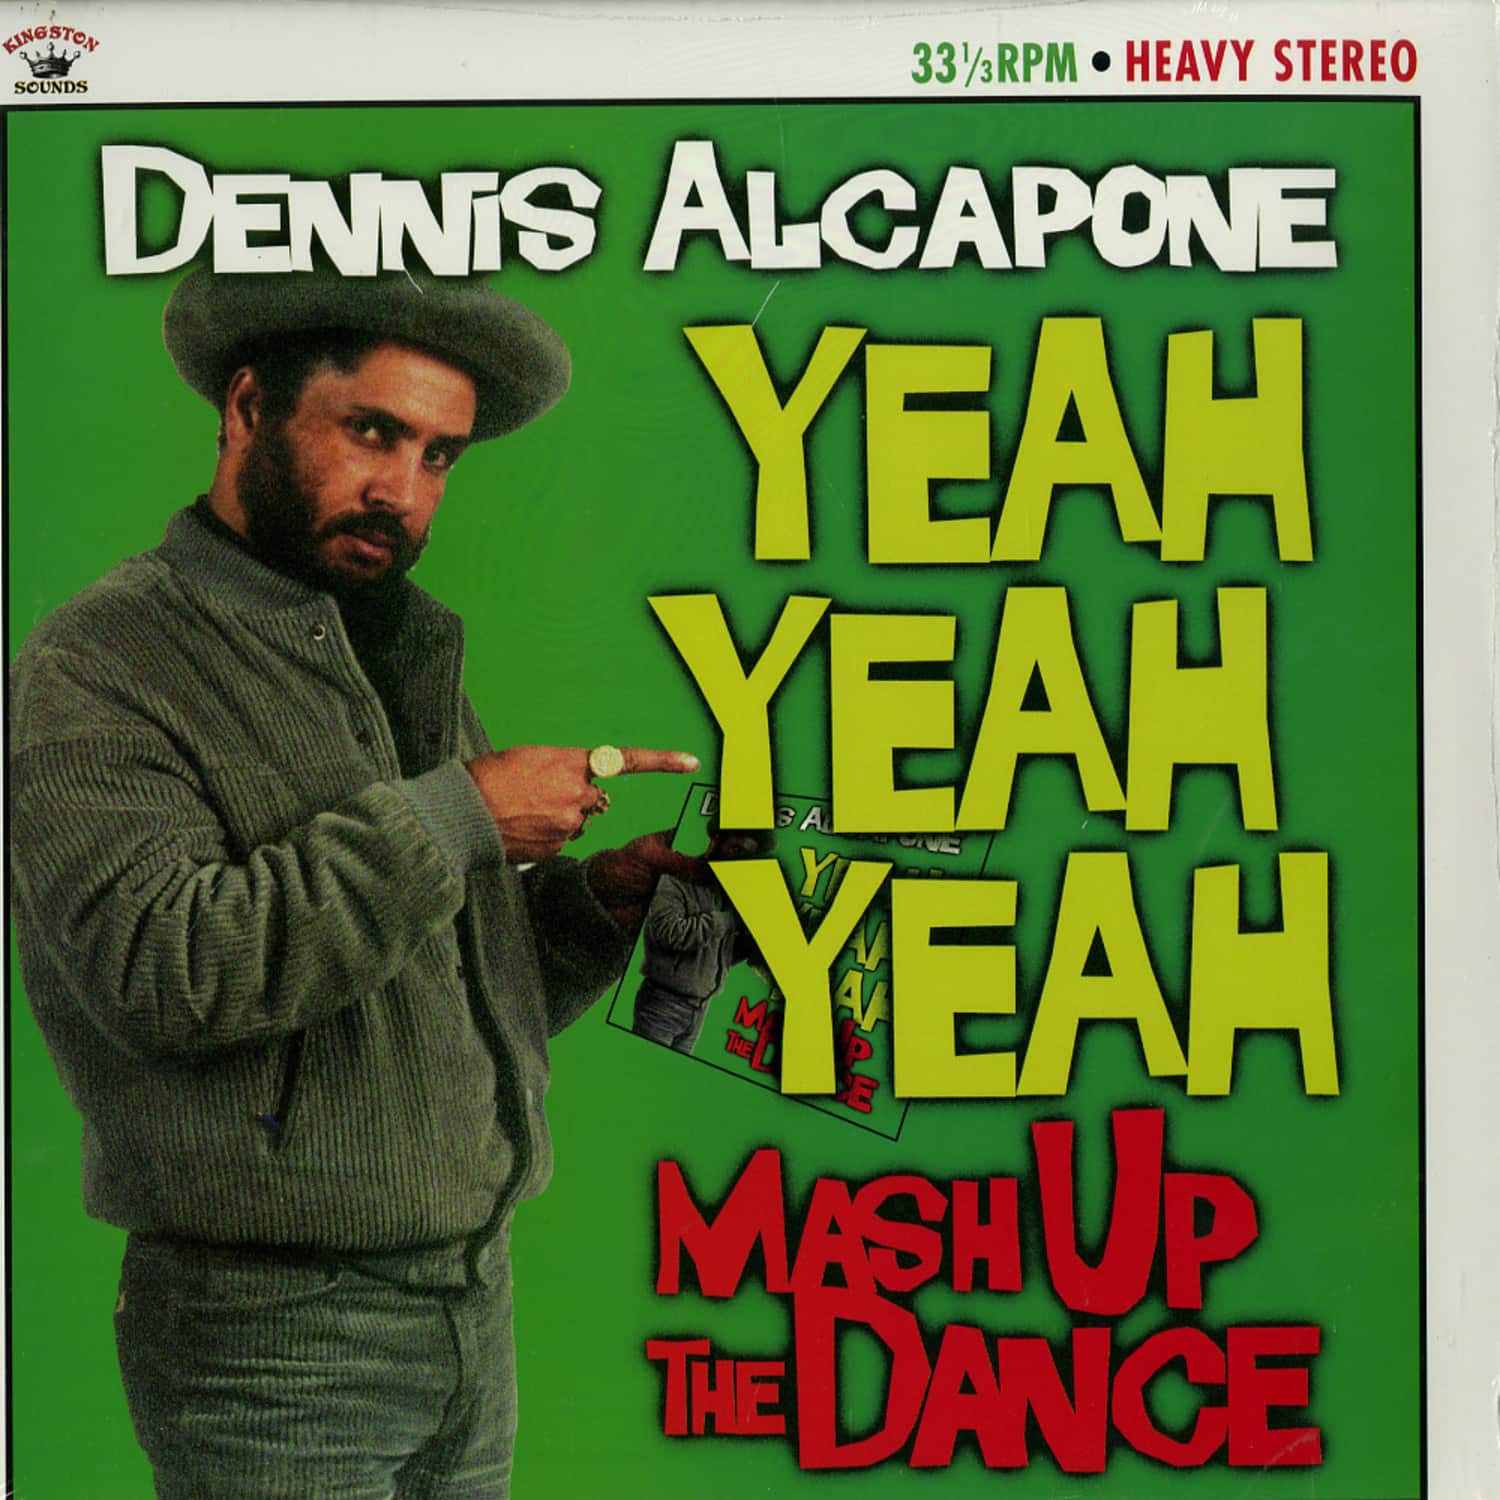 Dennis Alcapone - YAEH YEAH YEAH - MASH UP THE DANCE 